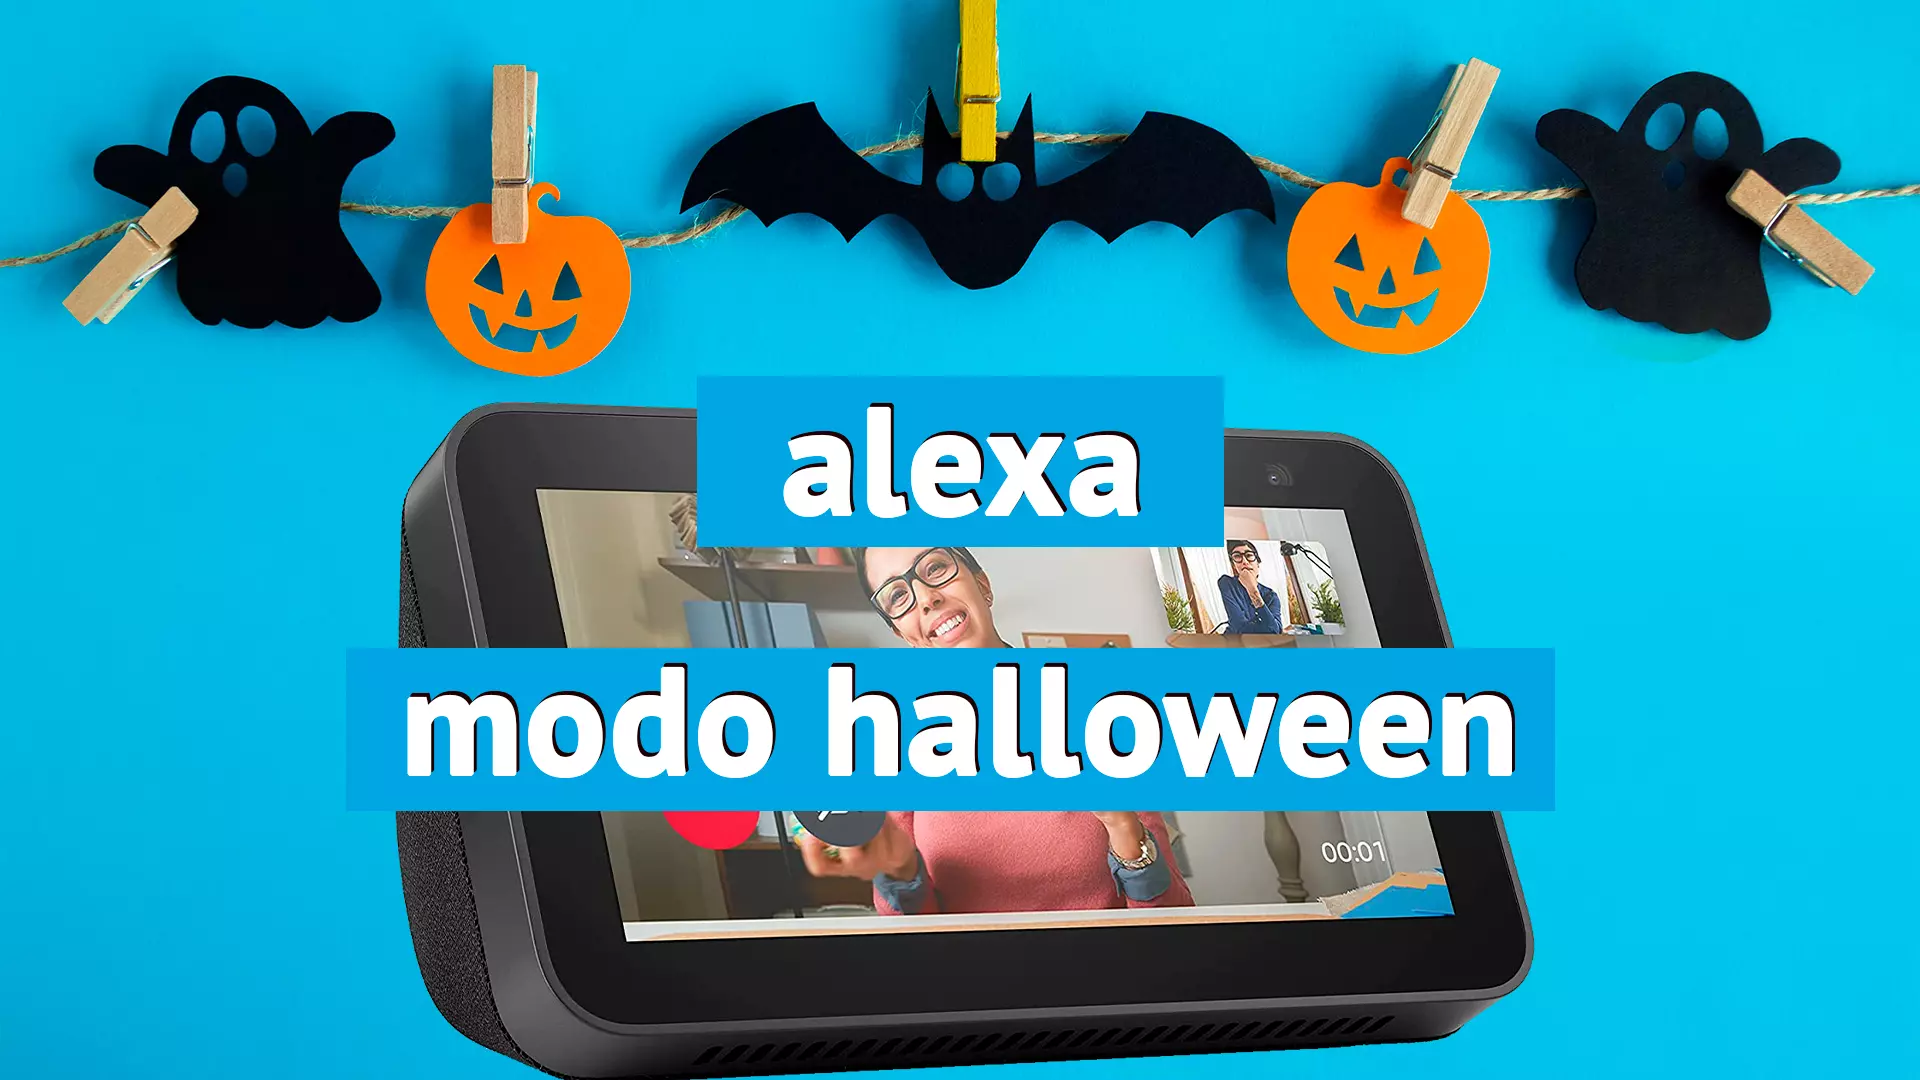 Alexa Halloween, el modo halloween de Alexa